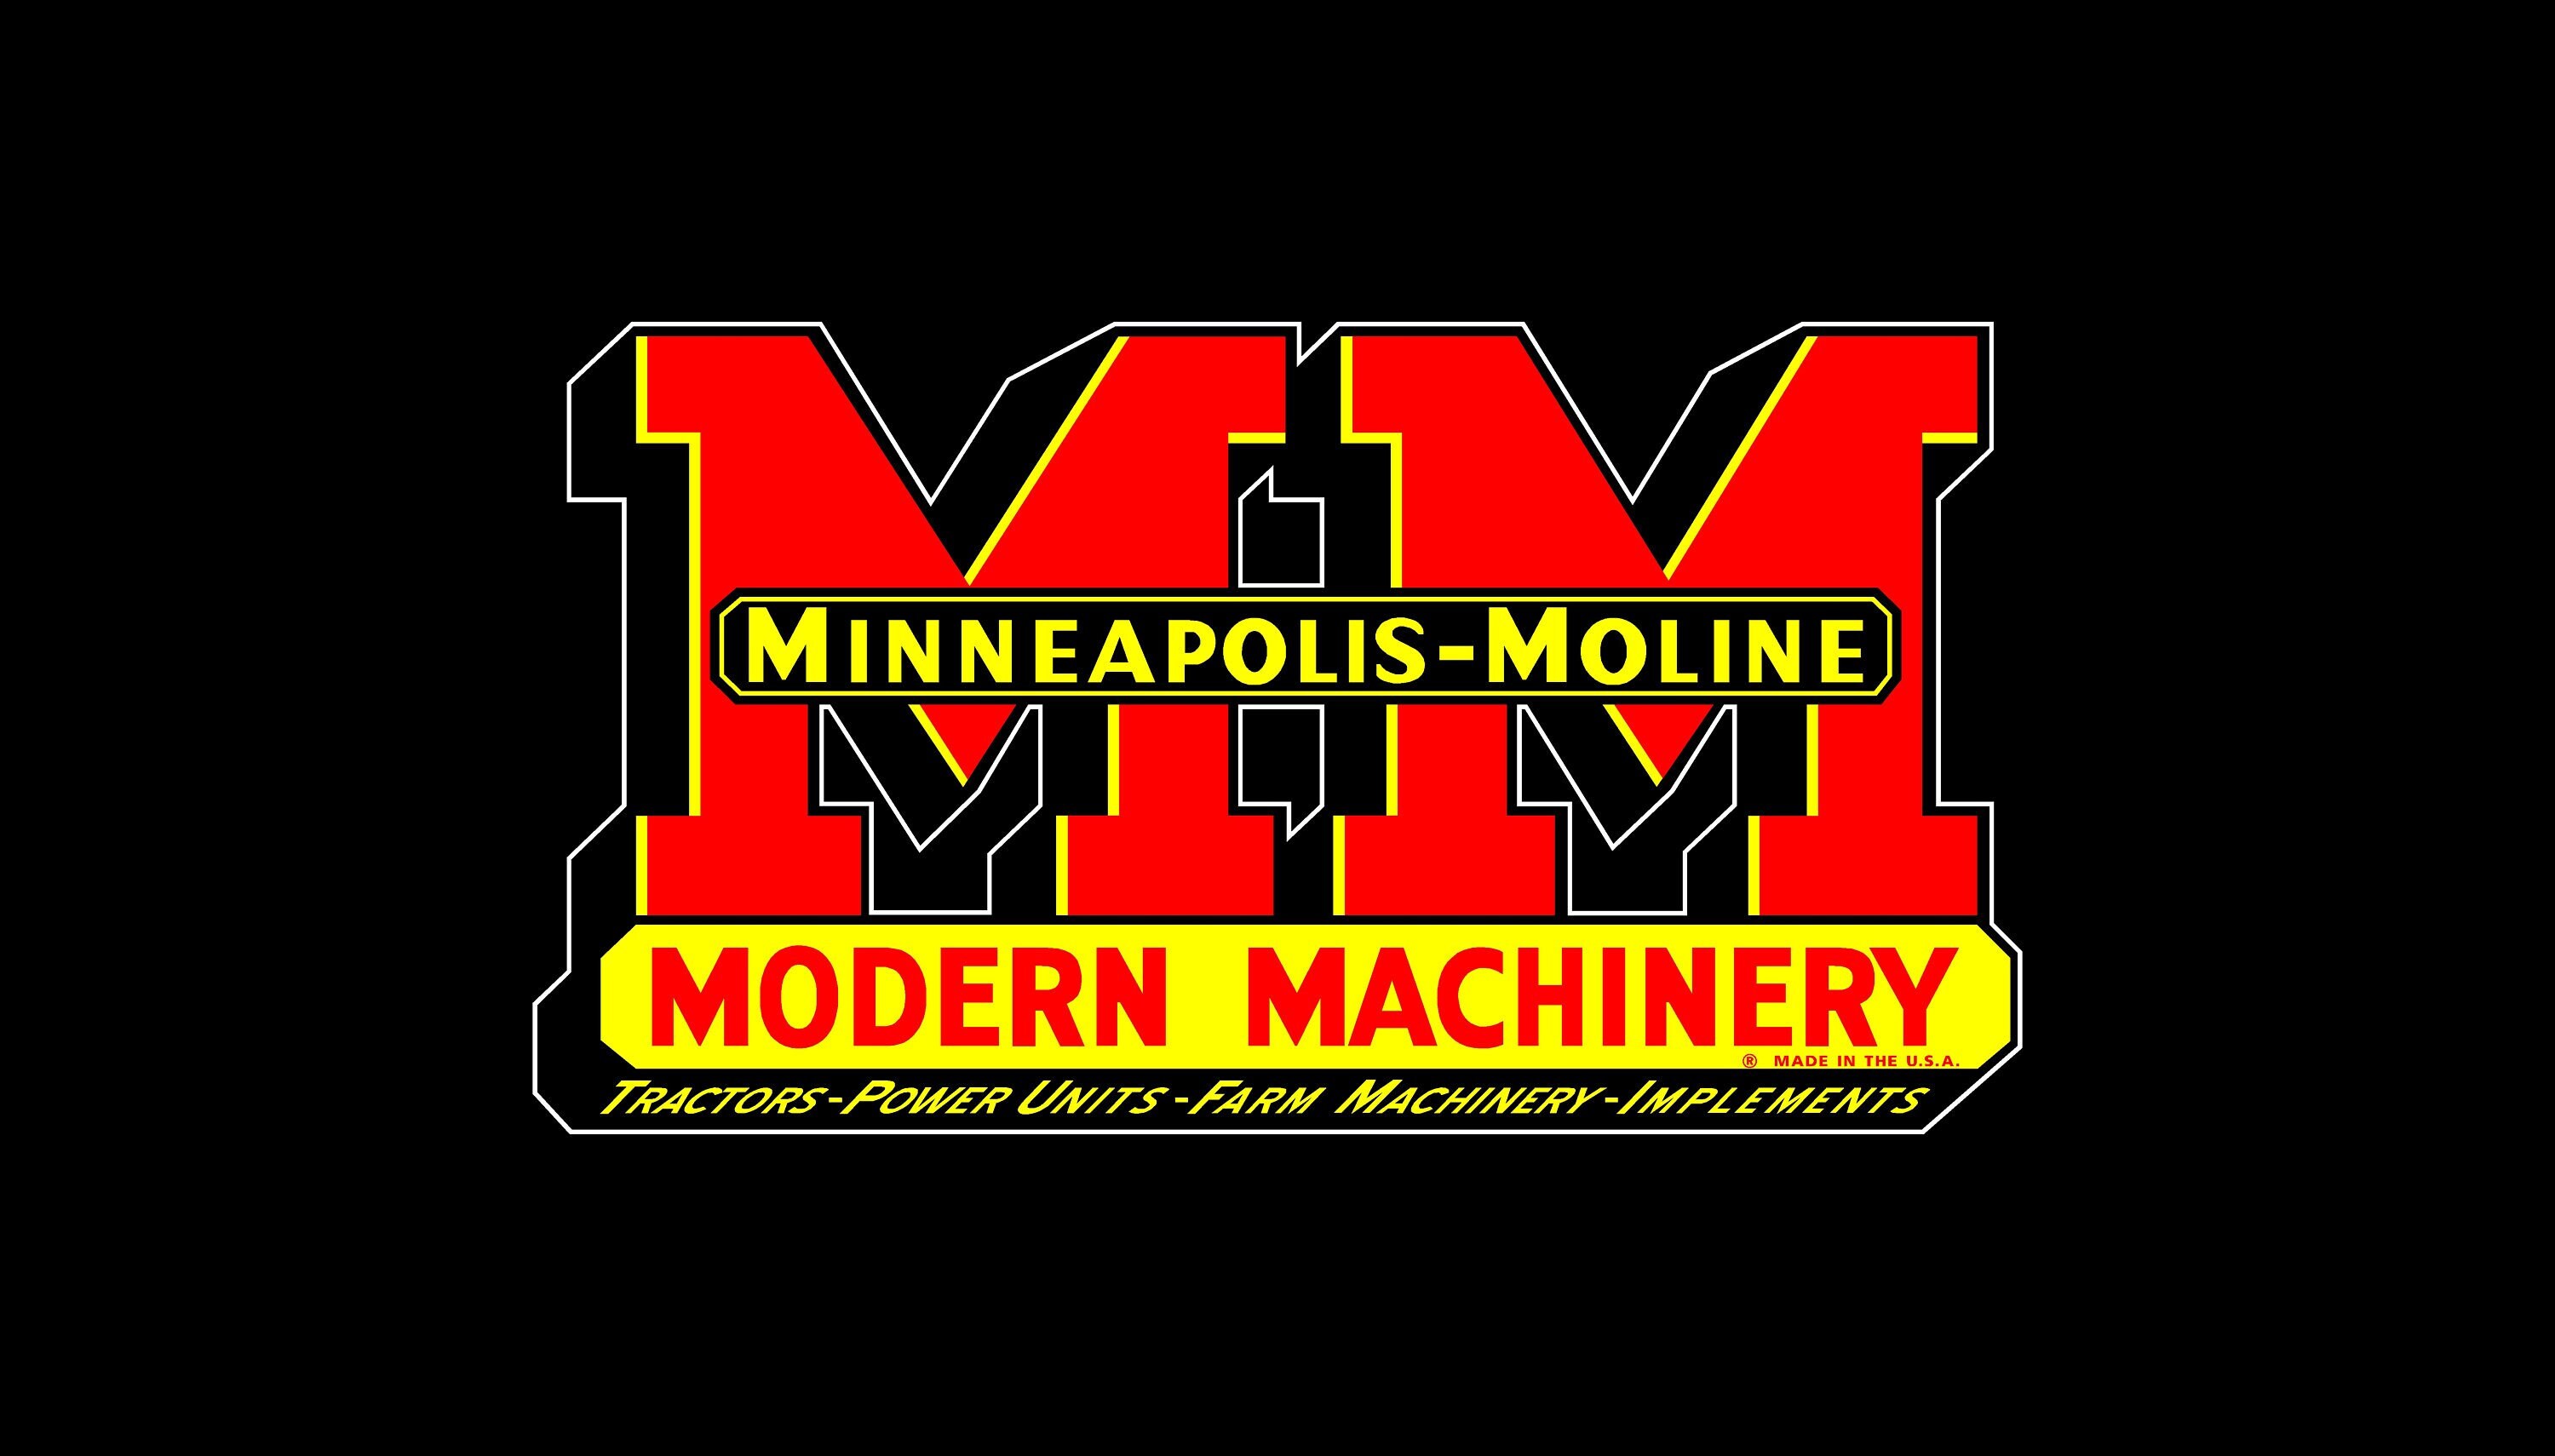 Minneapolis Moline G750